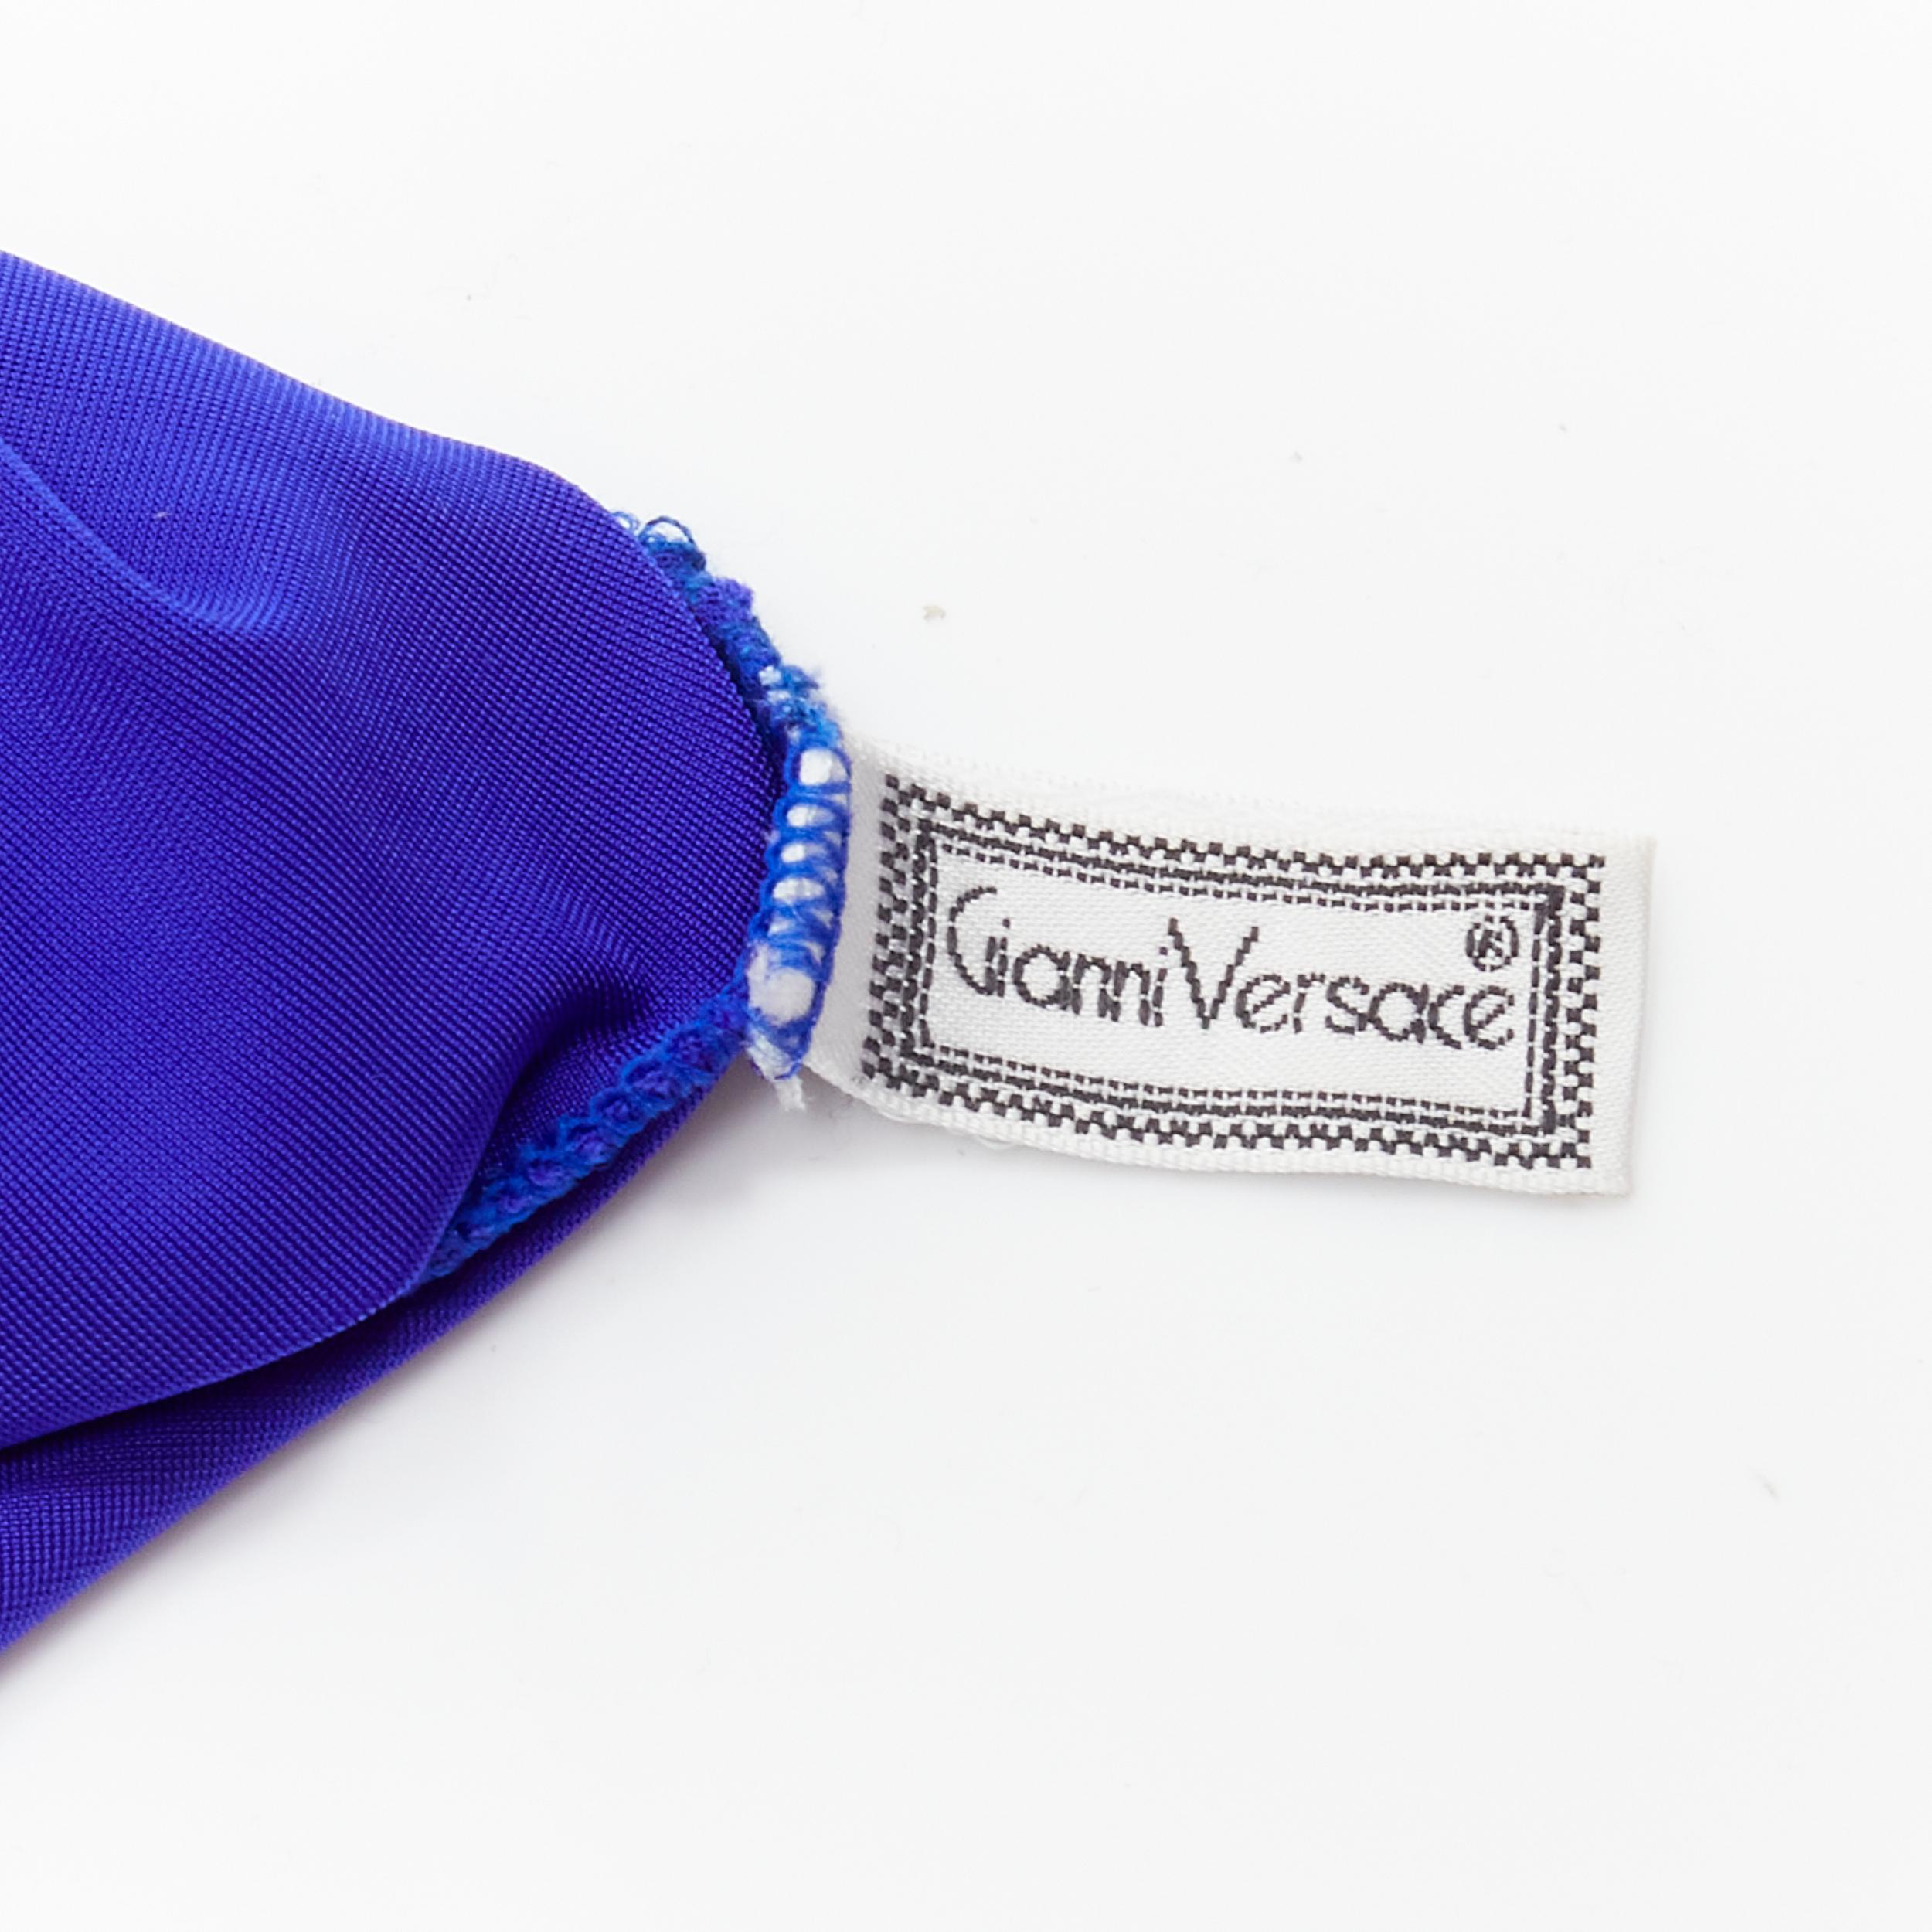 GIANNI VERSACE Vintage blue lace satin panels blue crystal body suit top For Sale 6